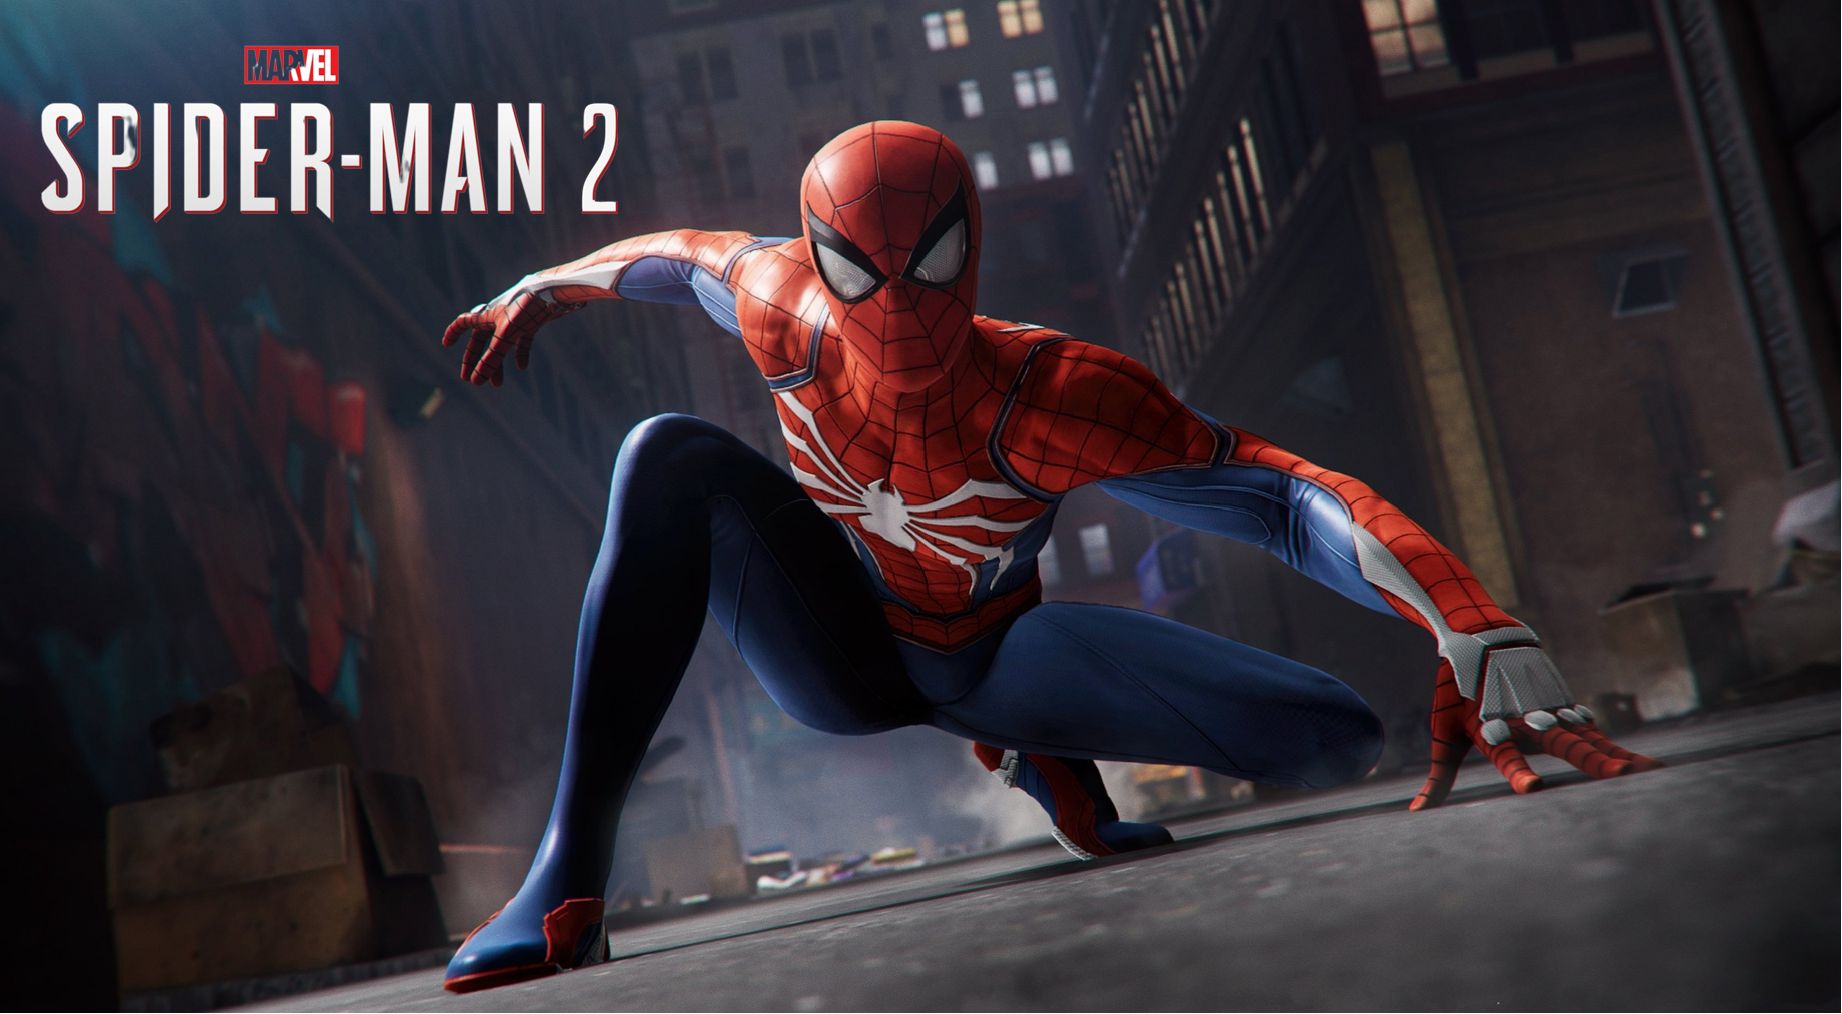 Peter In His Spider-Man Suit